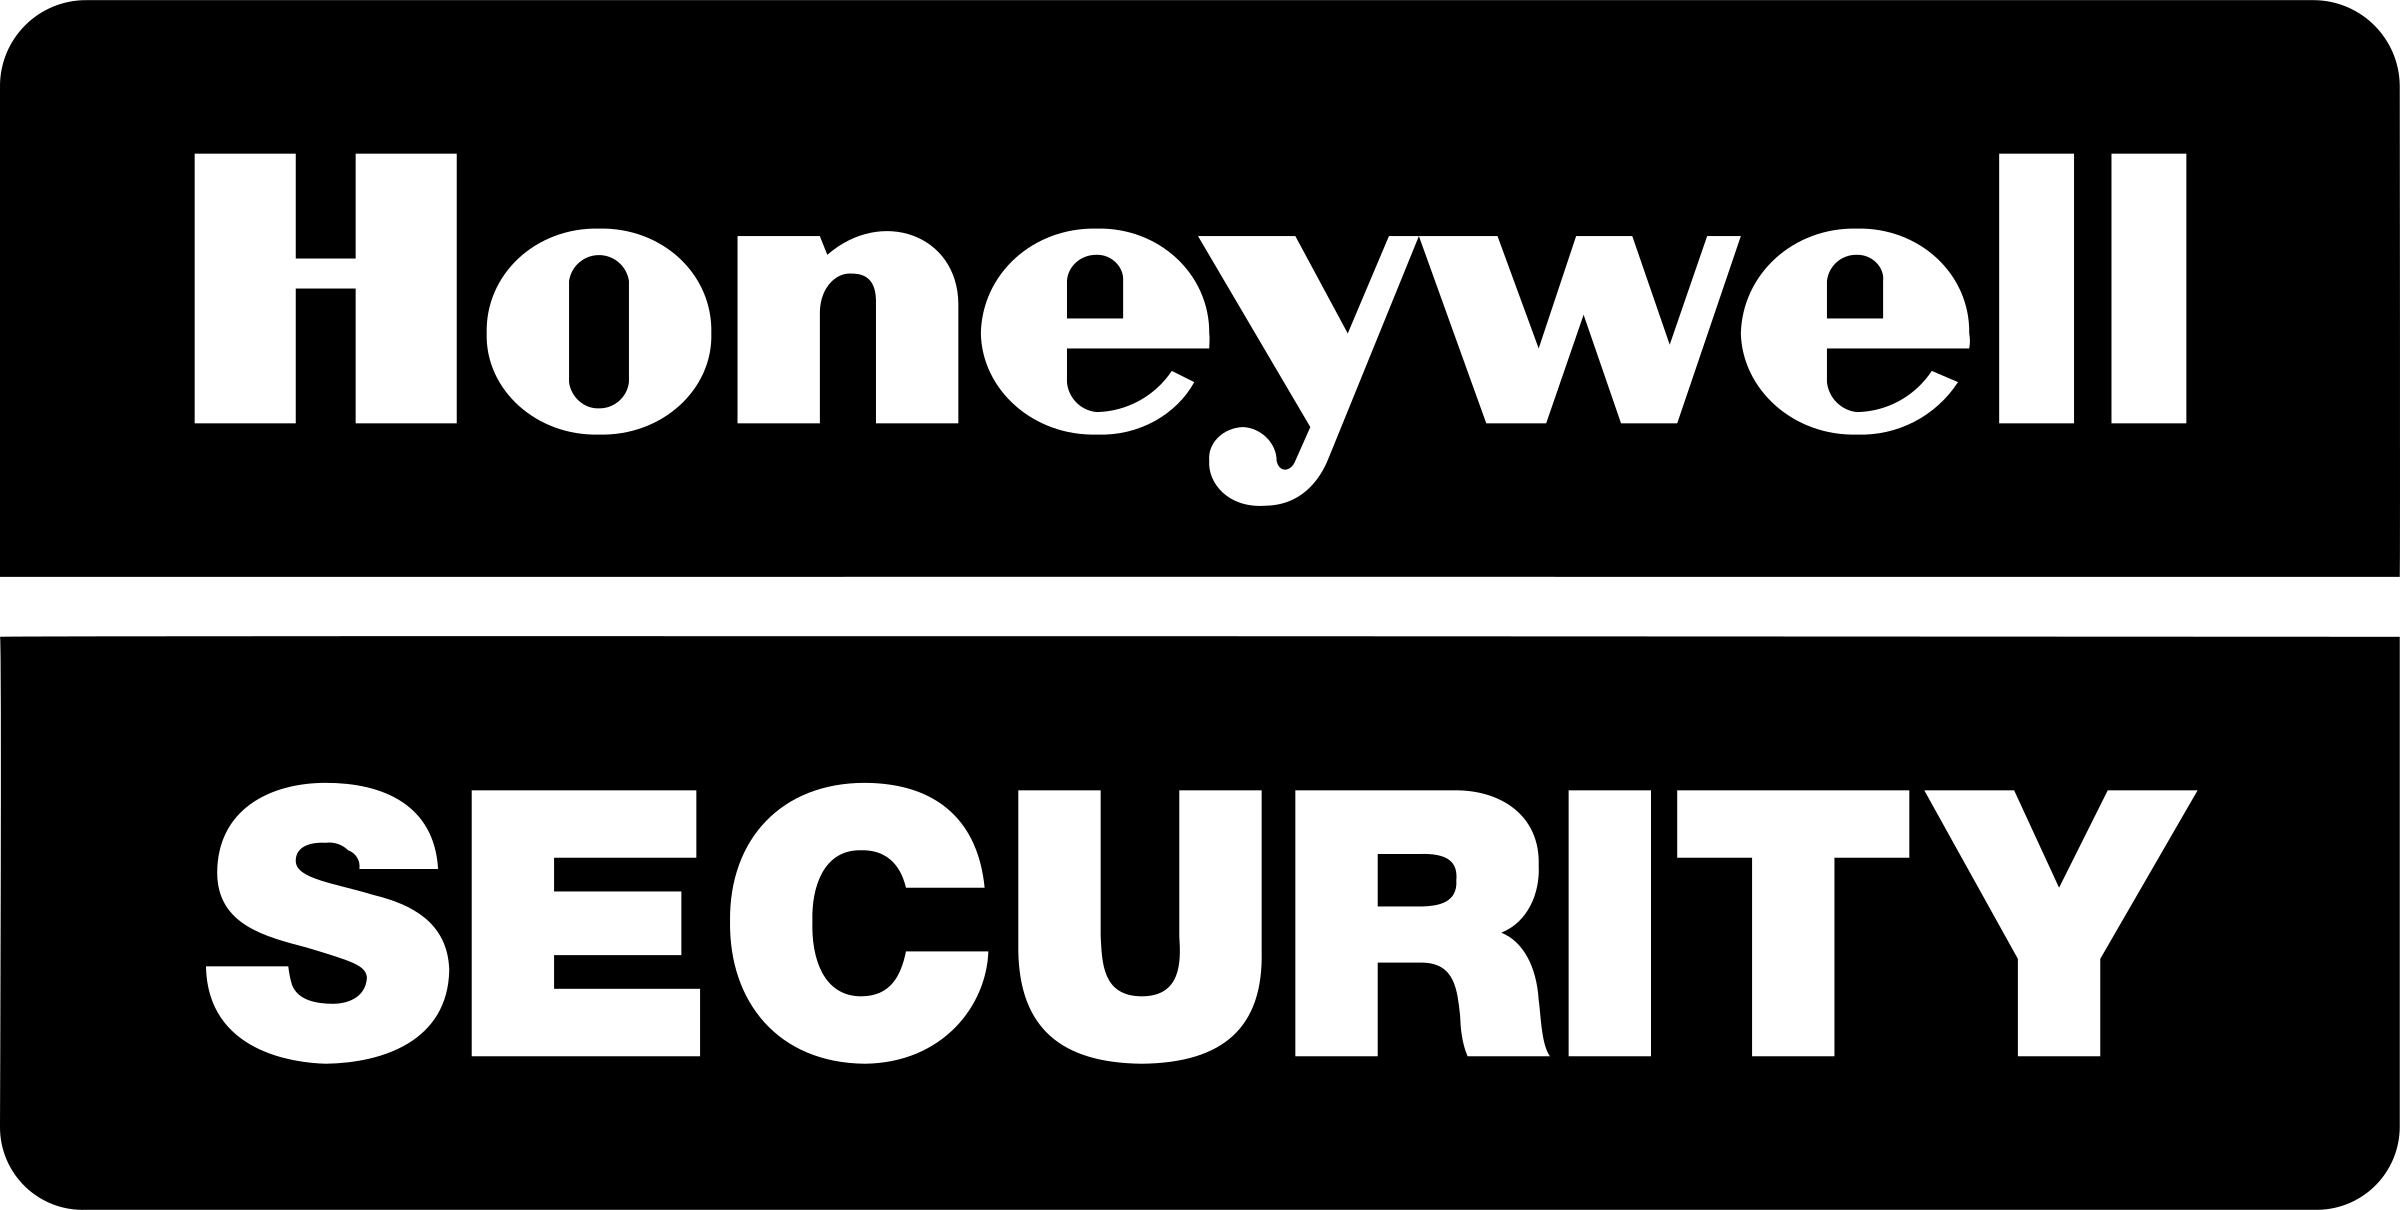 honeywell-security-logo-png-transparent